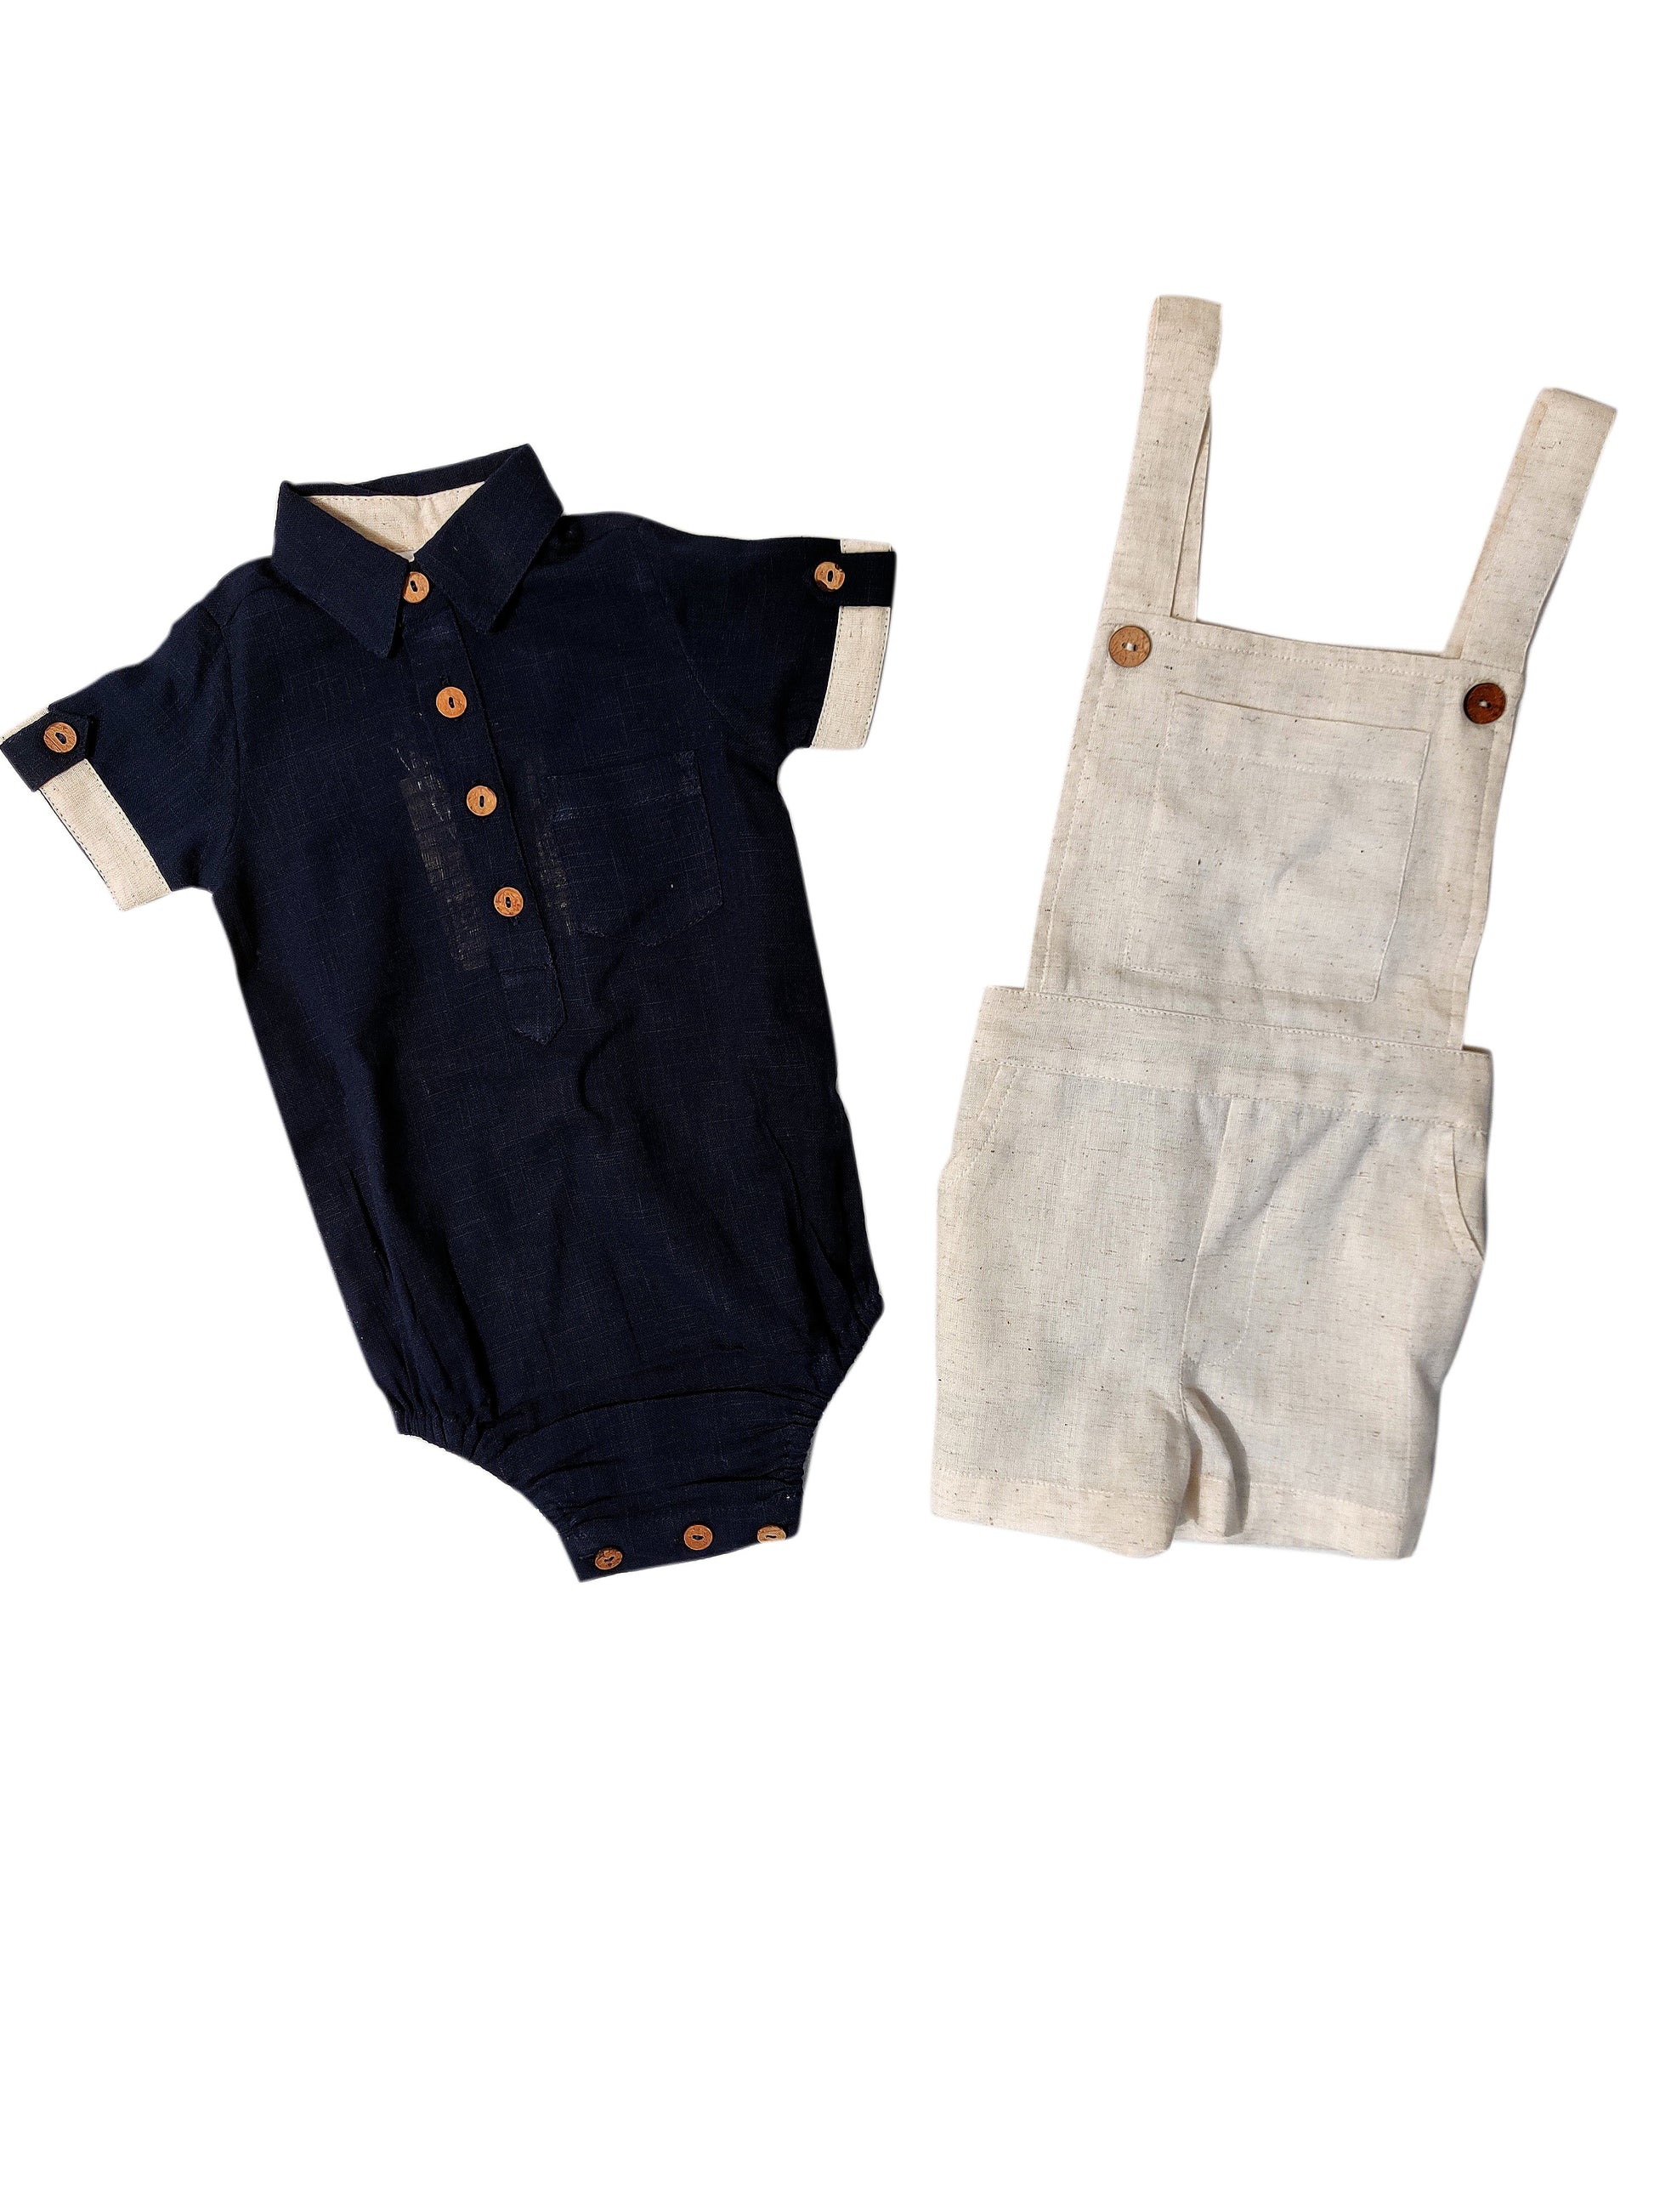 Infant Romper-Shirt and Overalls Set -Navy & Ivory